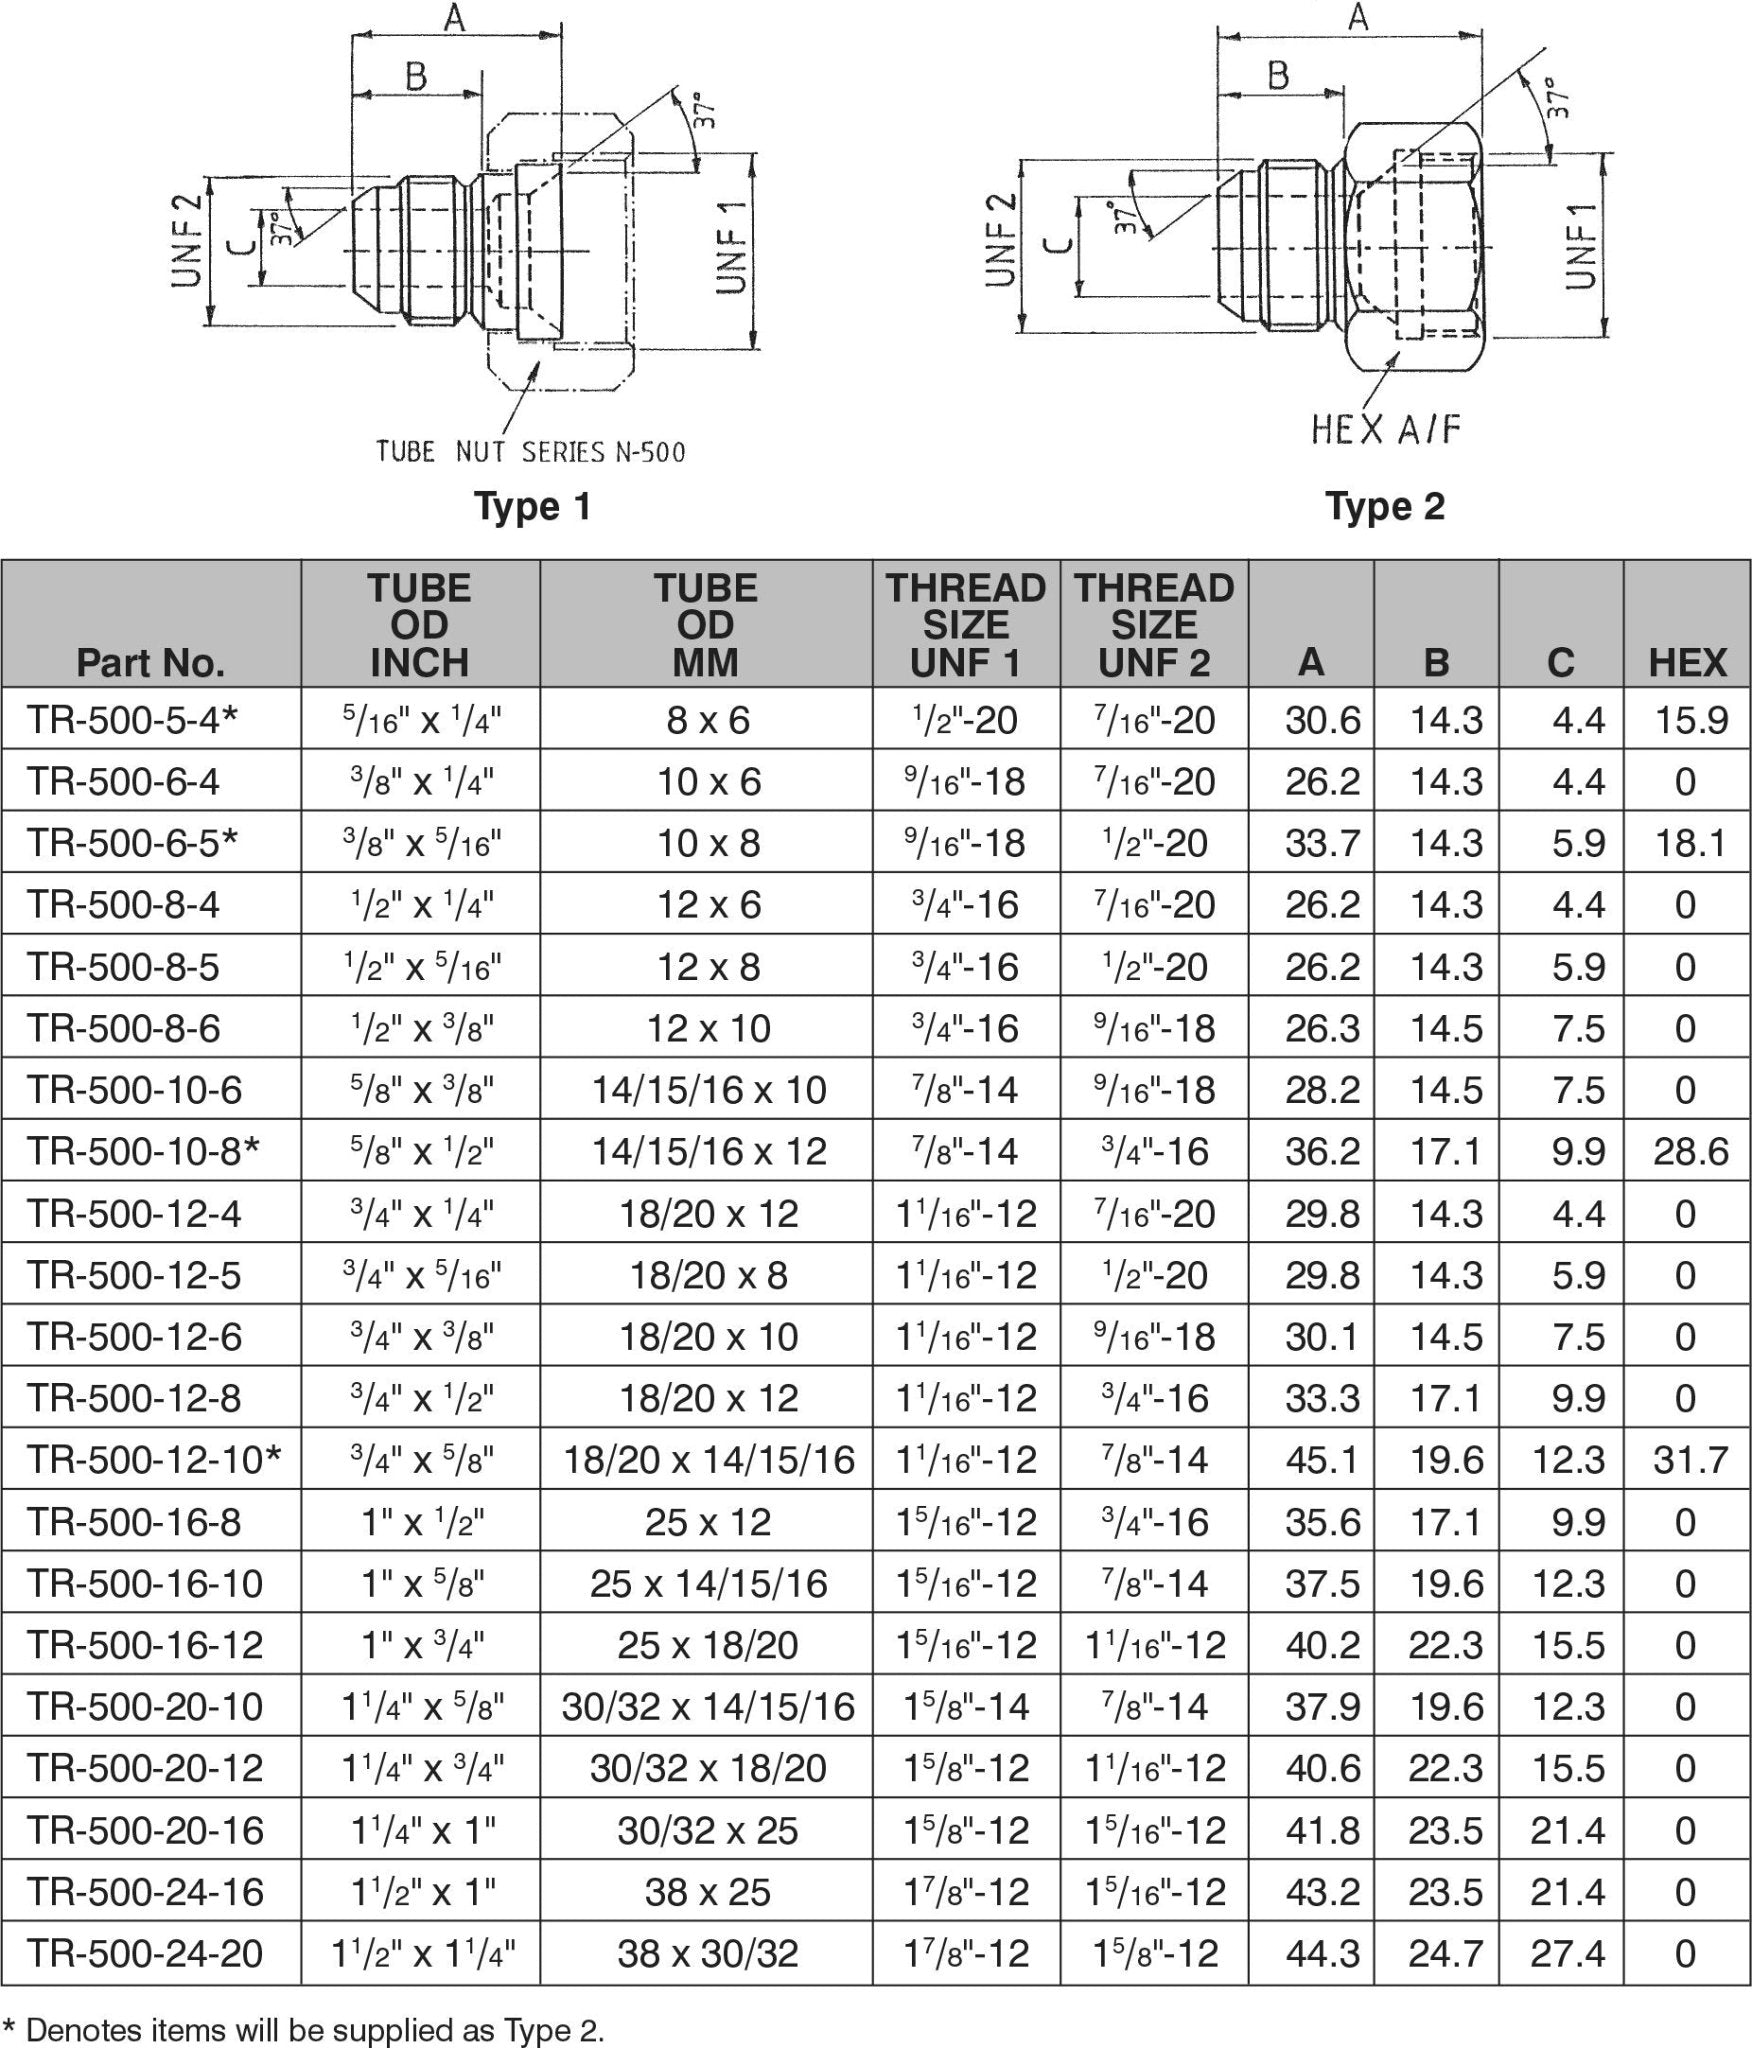 1.1/16-12 x 7/8"-14 JIC TUBE END REDUCER TYPE 2.-TR-500-12-10